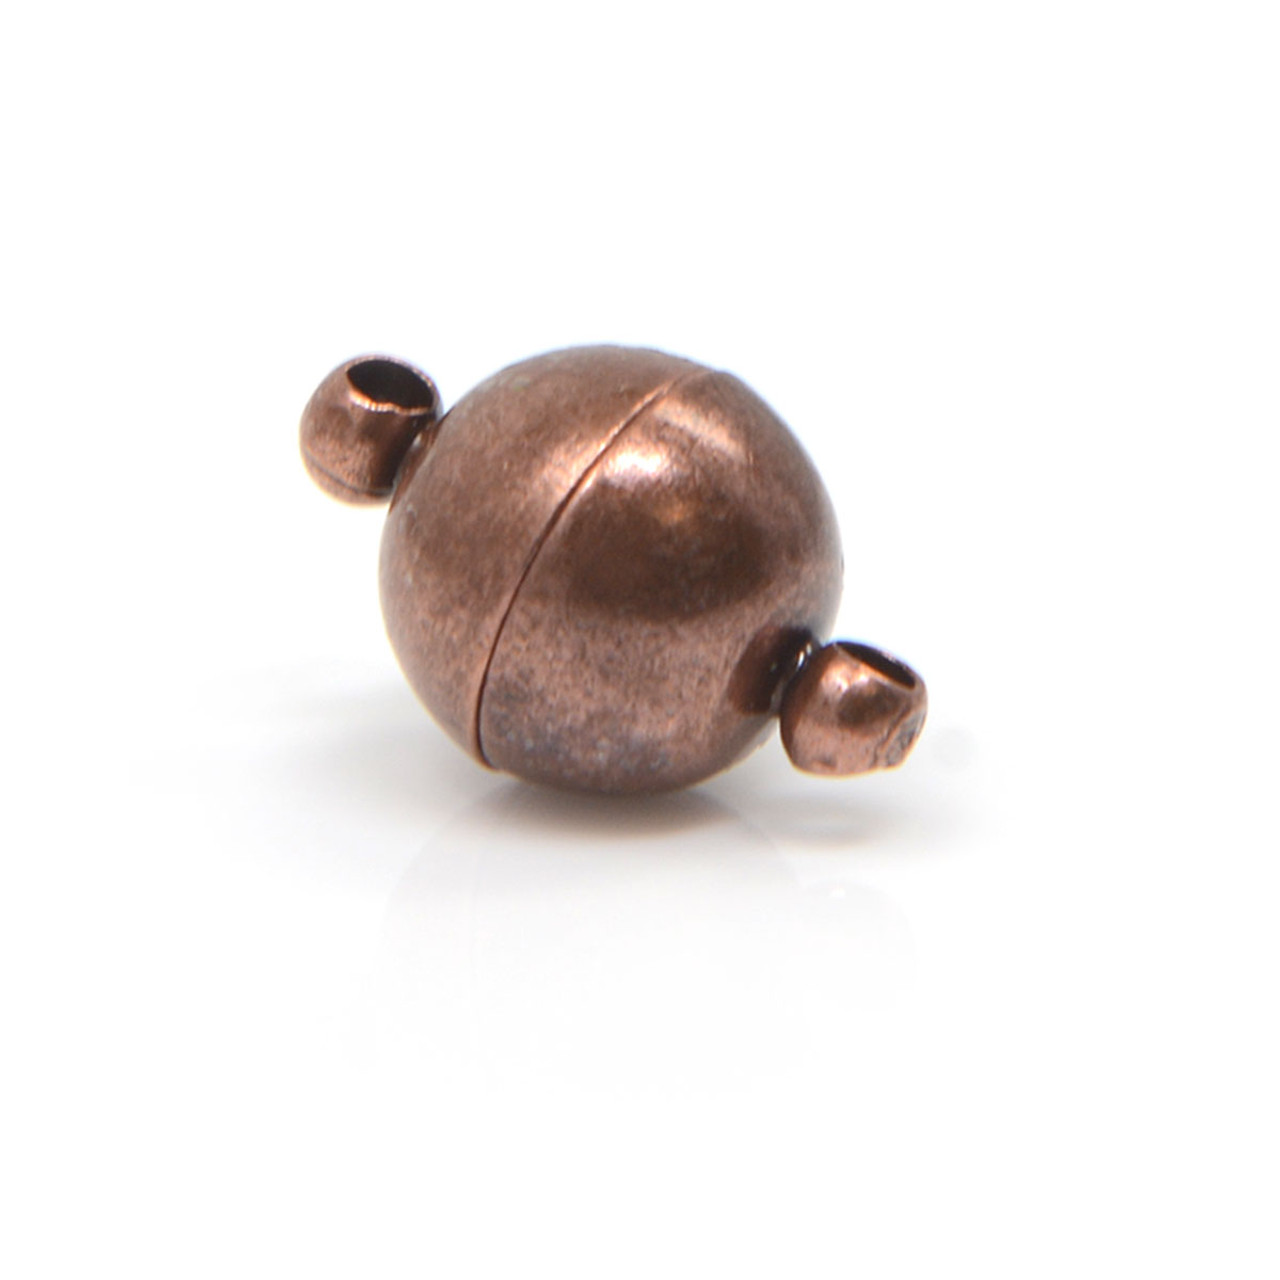 <img src="Bracelet Clasp Magnetic Copper Ball Neodymium Magnetic Bracelet Clasp.png" alt=" magnetic jewelry clasps strong magnetic clasps for jewelry">